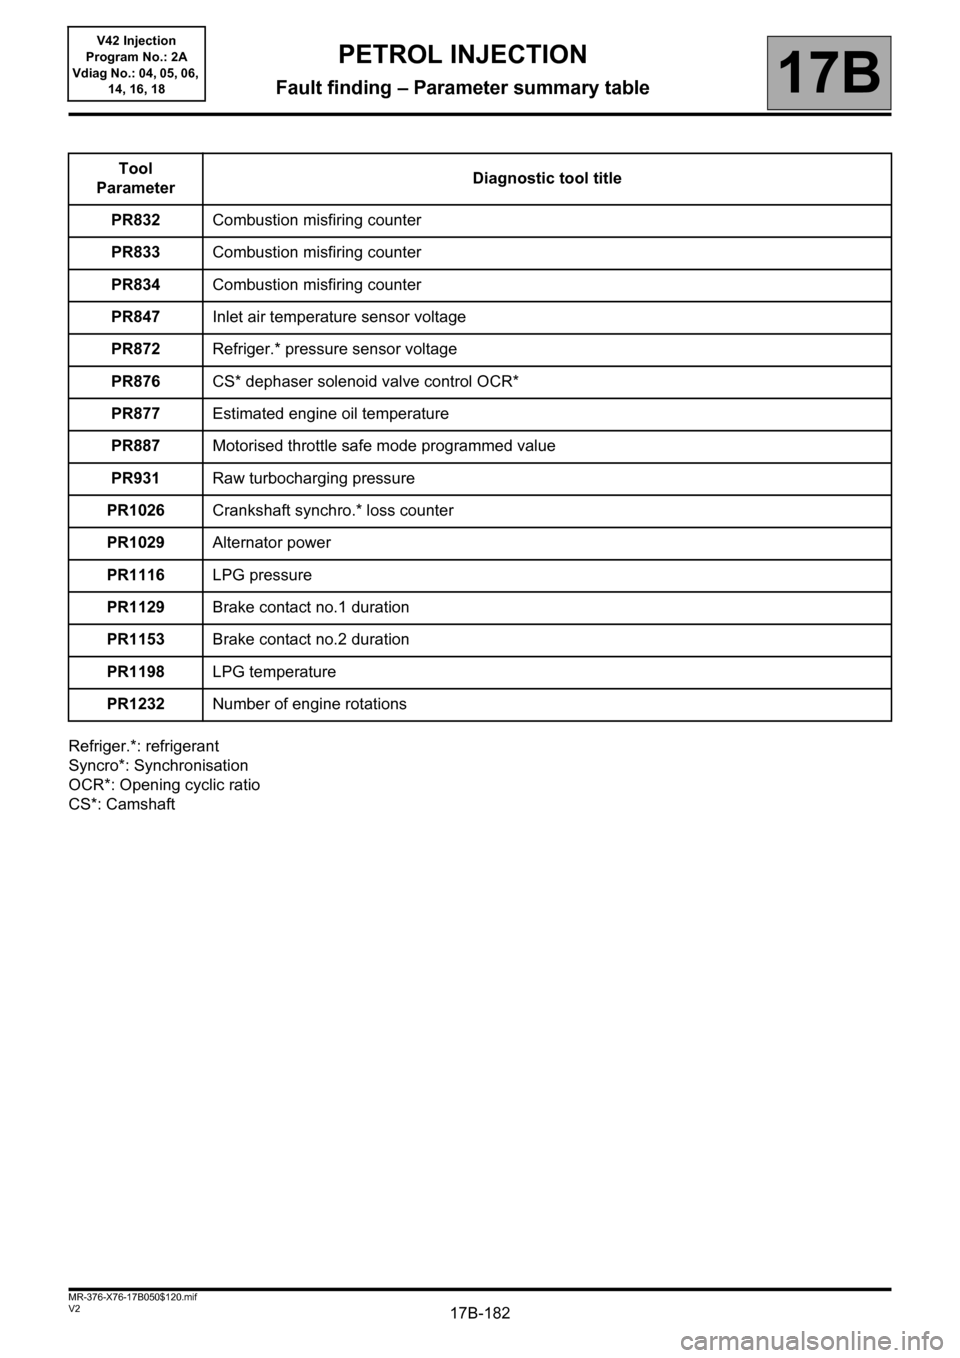 RENAULT KANGOO 2013 X61 / 2.G Petrol V42 Injection Workshop Manual 17B-182V2 MR-376-X76-17B050$120.mif
PETROL INJECTION
Fault finding – Parameter summary table17B
V42 Injection
Program No.: 2A
Vdiag No.: 04, 05, 06, 
14, 16, 18
Refriger.*: refrigerant
Syncro*: Sync